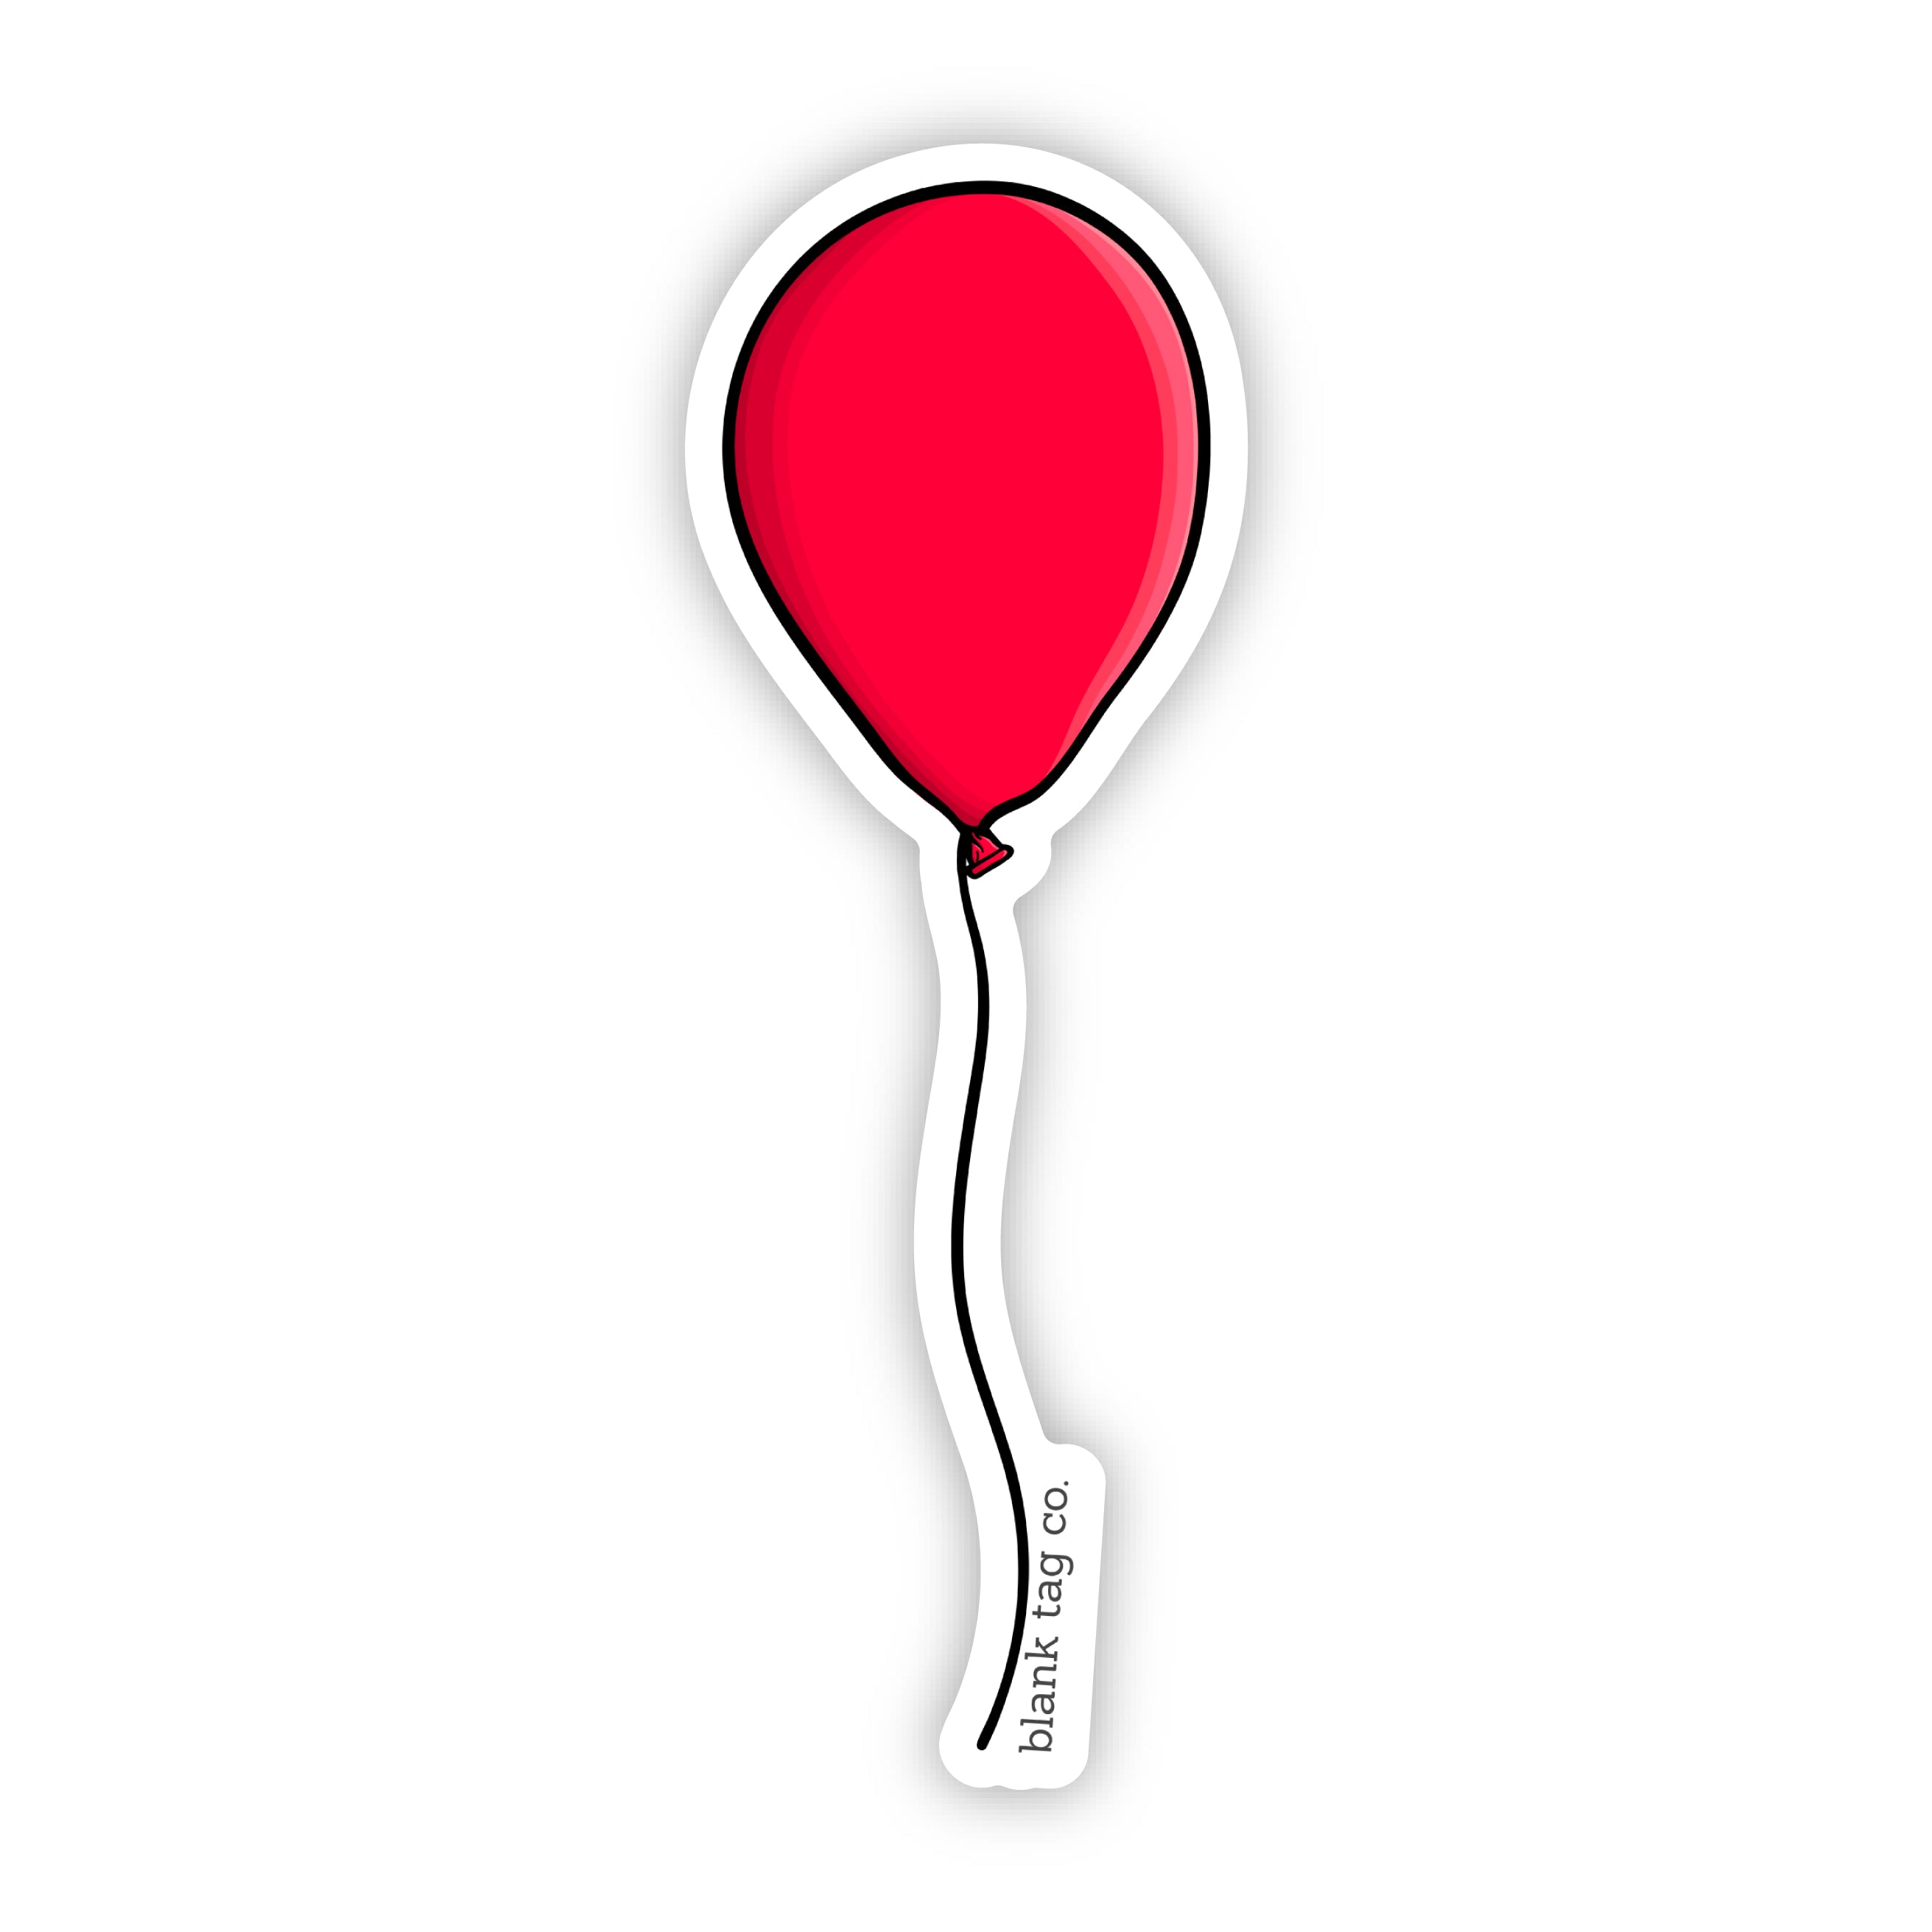 The Red Balloon Sticker